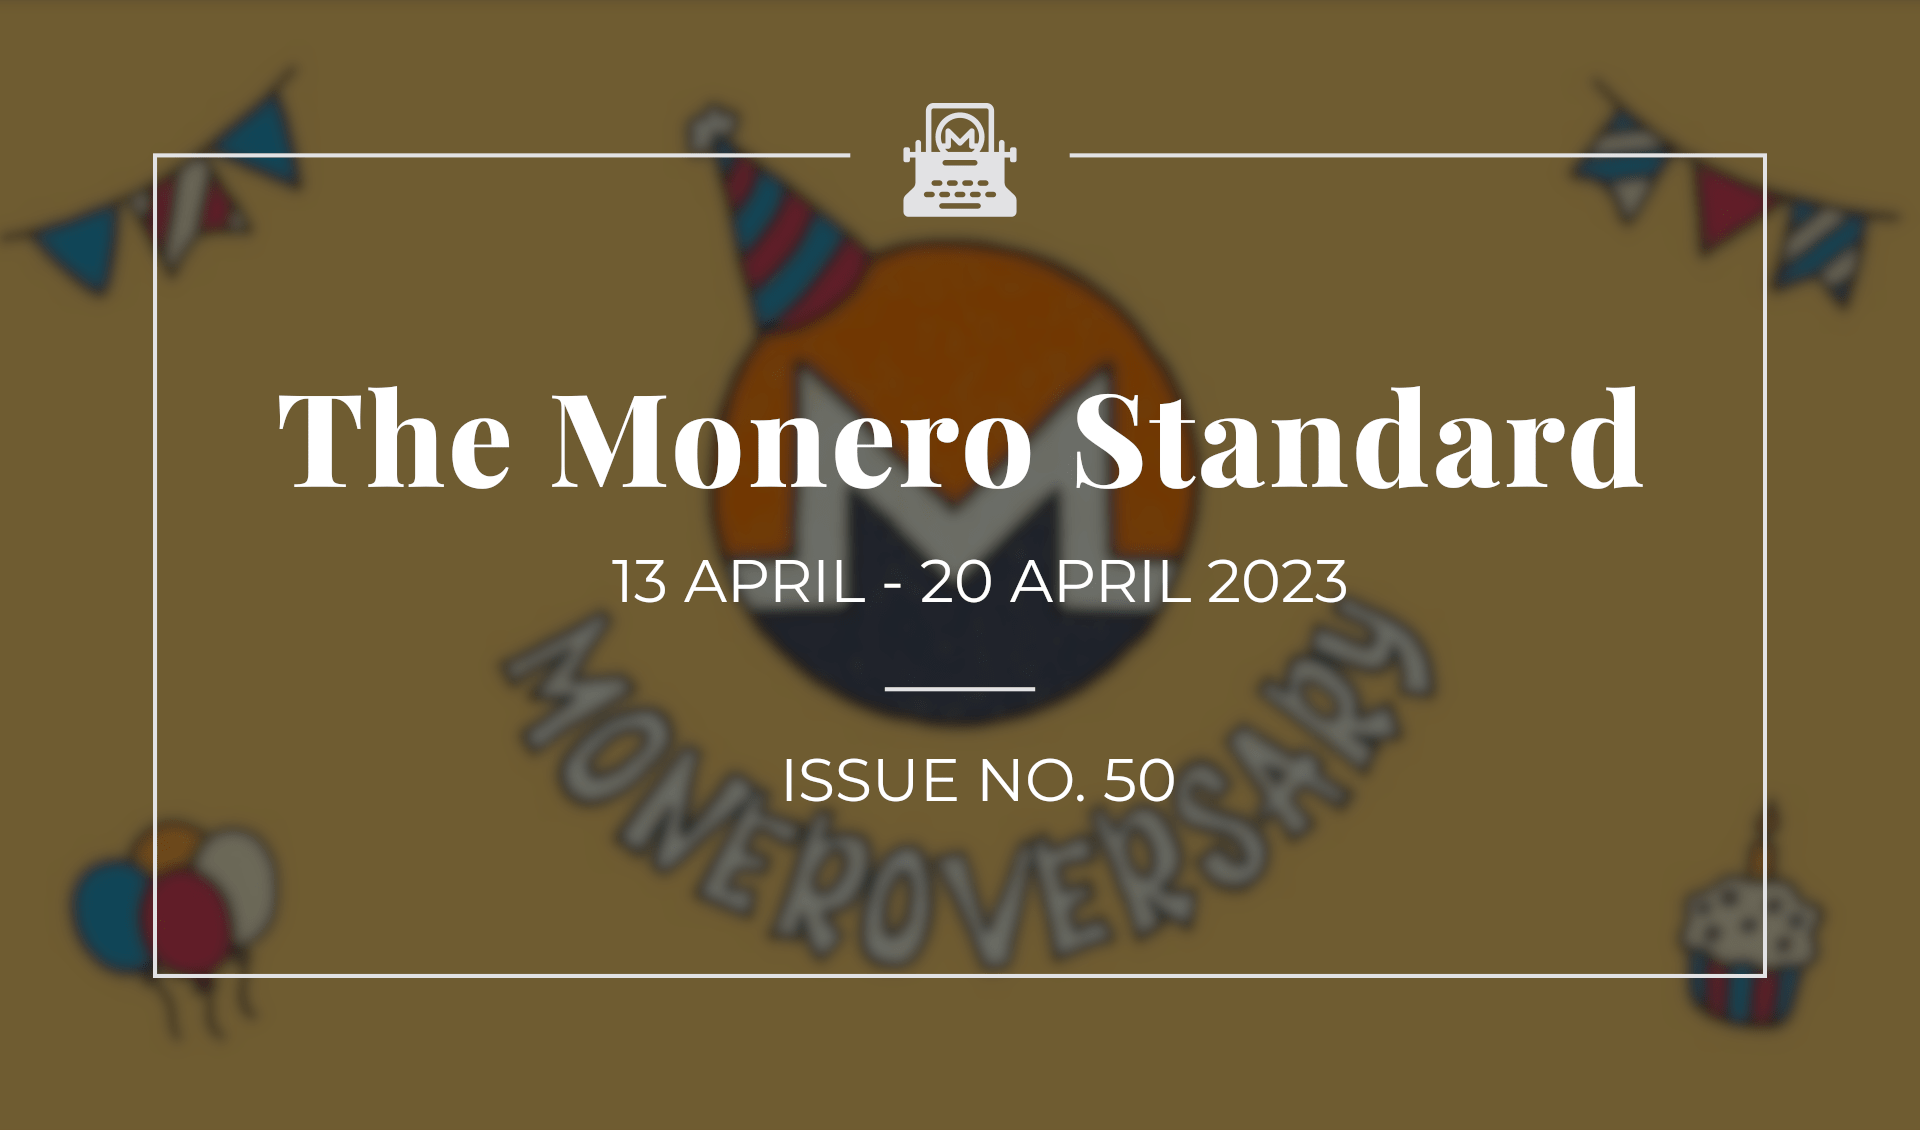 The Monero Standard #50: 13 April 2023 - 20 April 2023